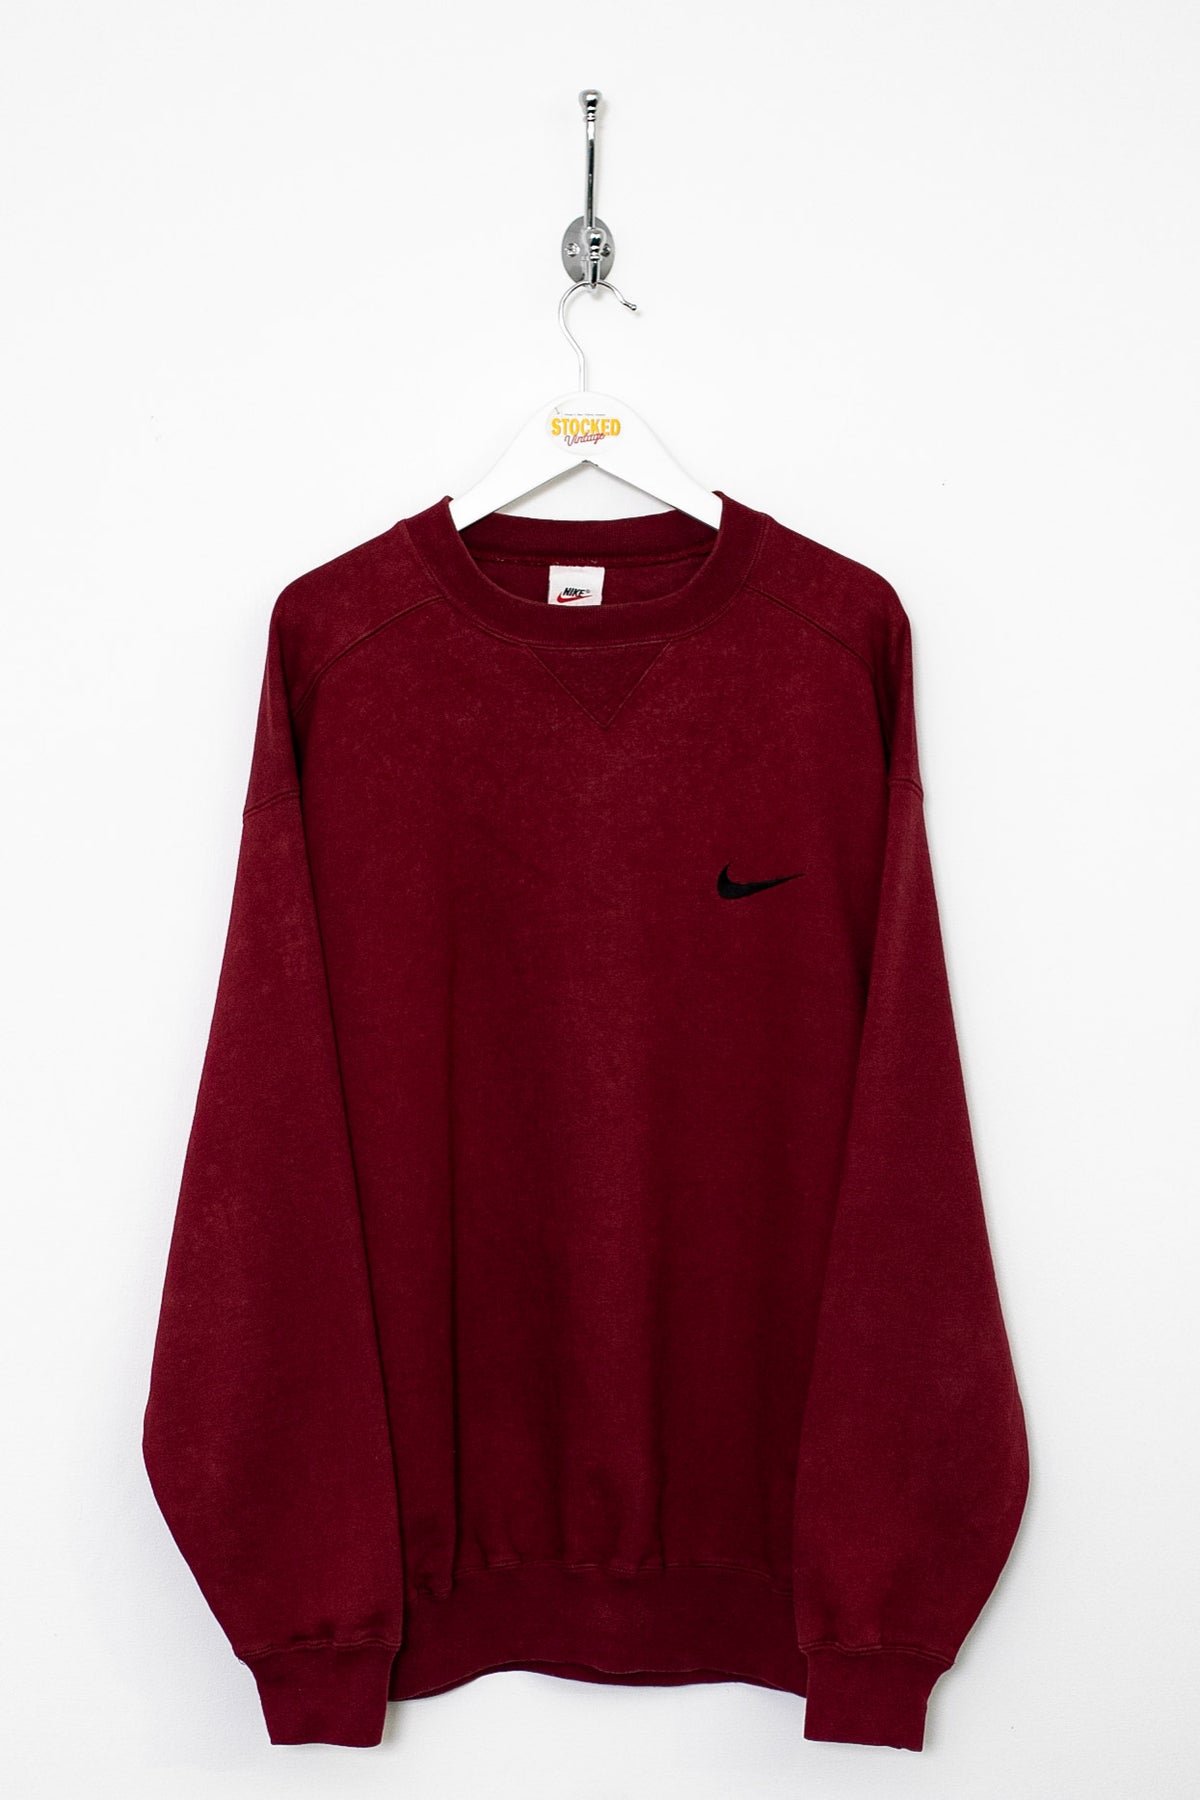 90s Nike Heavyweight Sweatshirt (L)